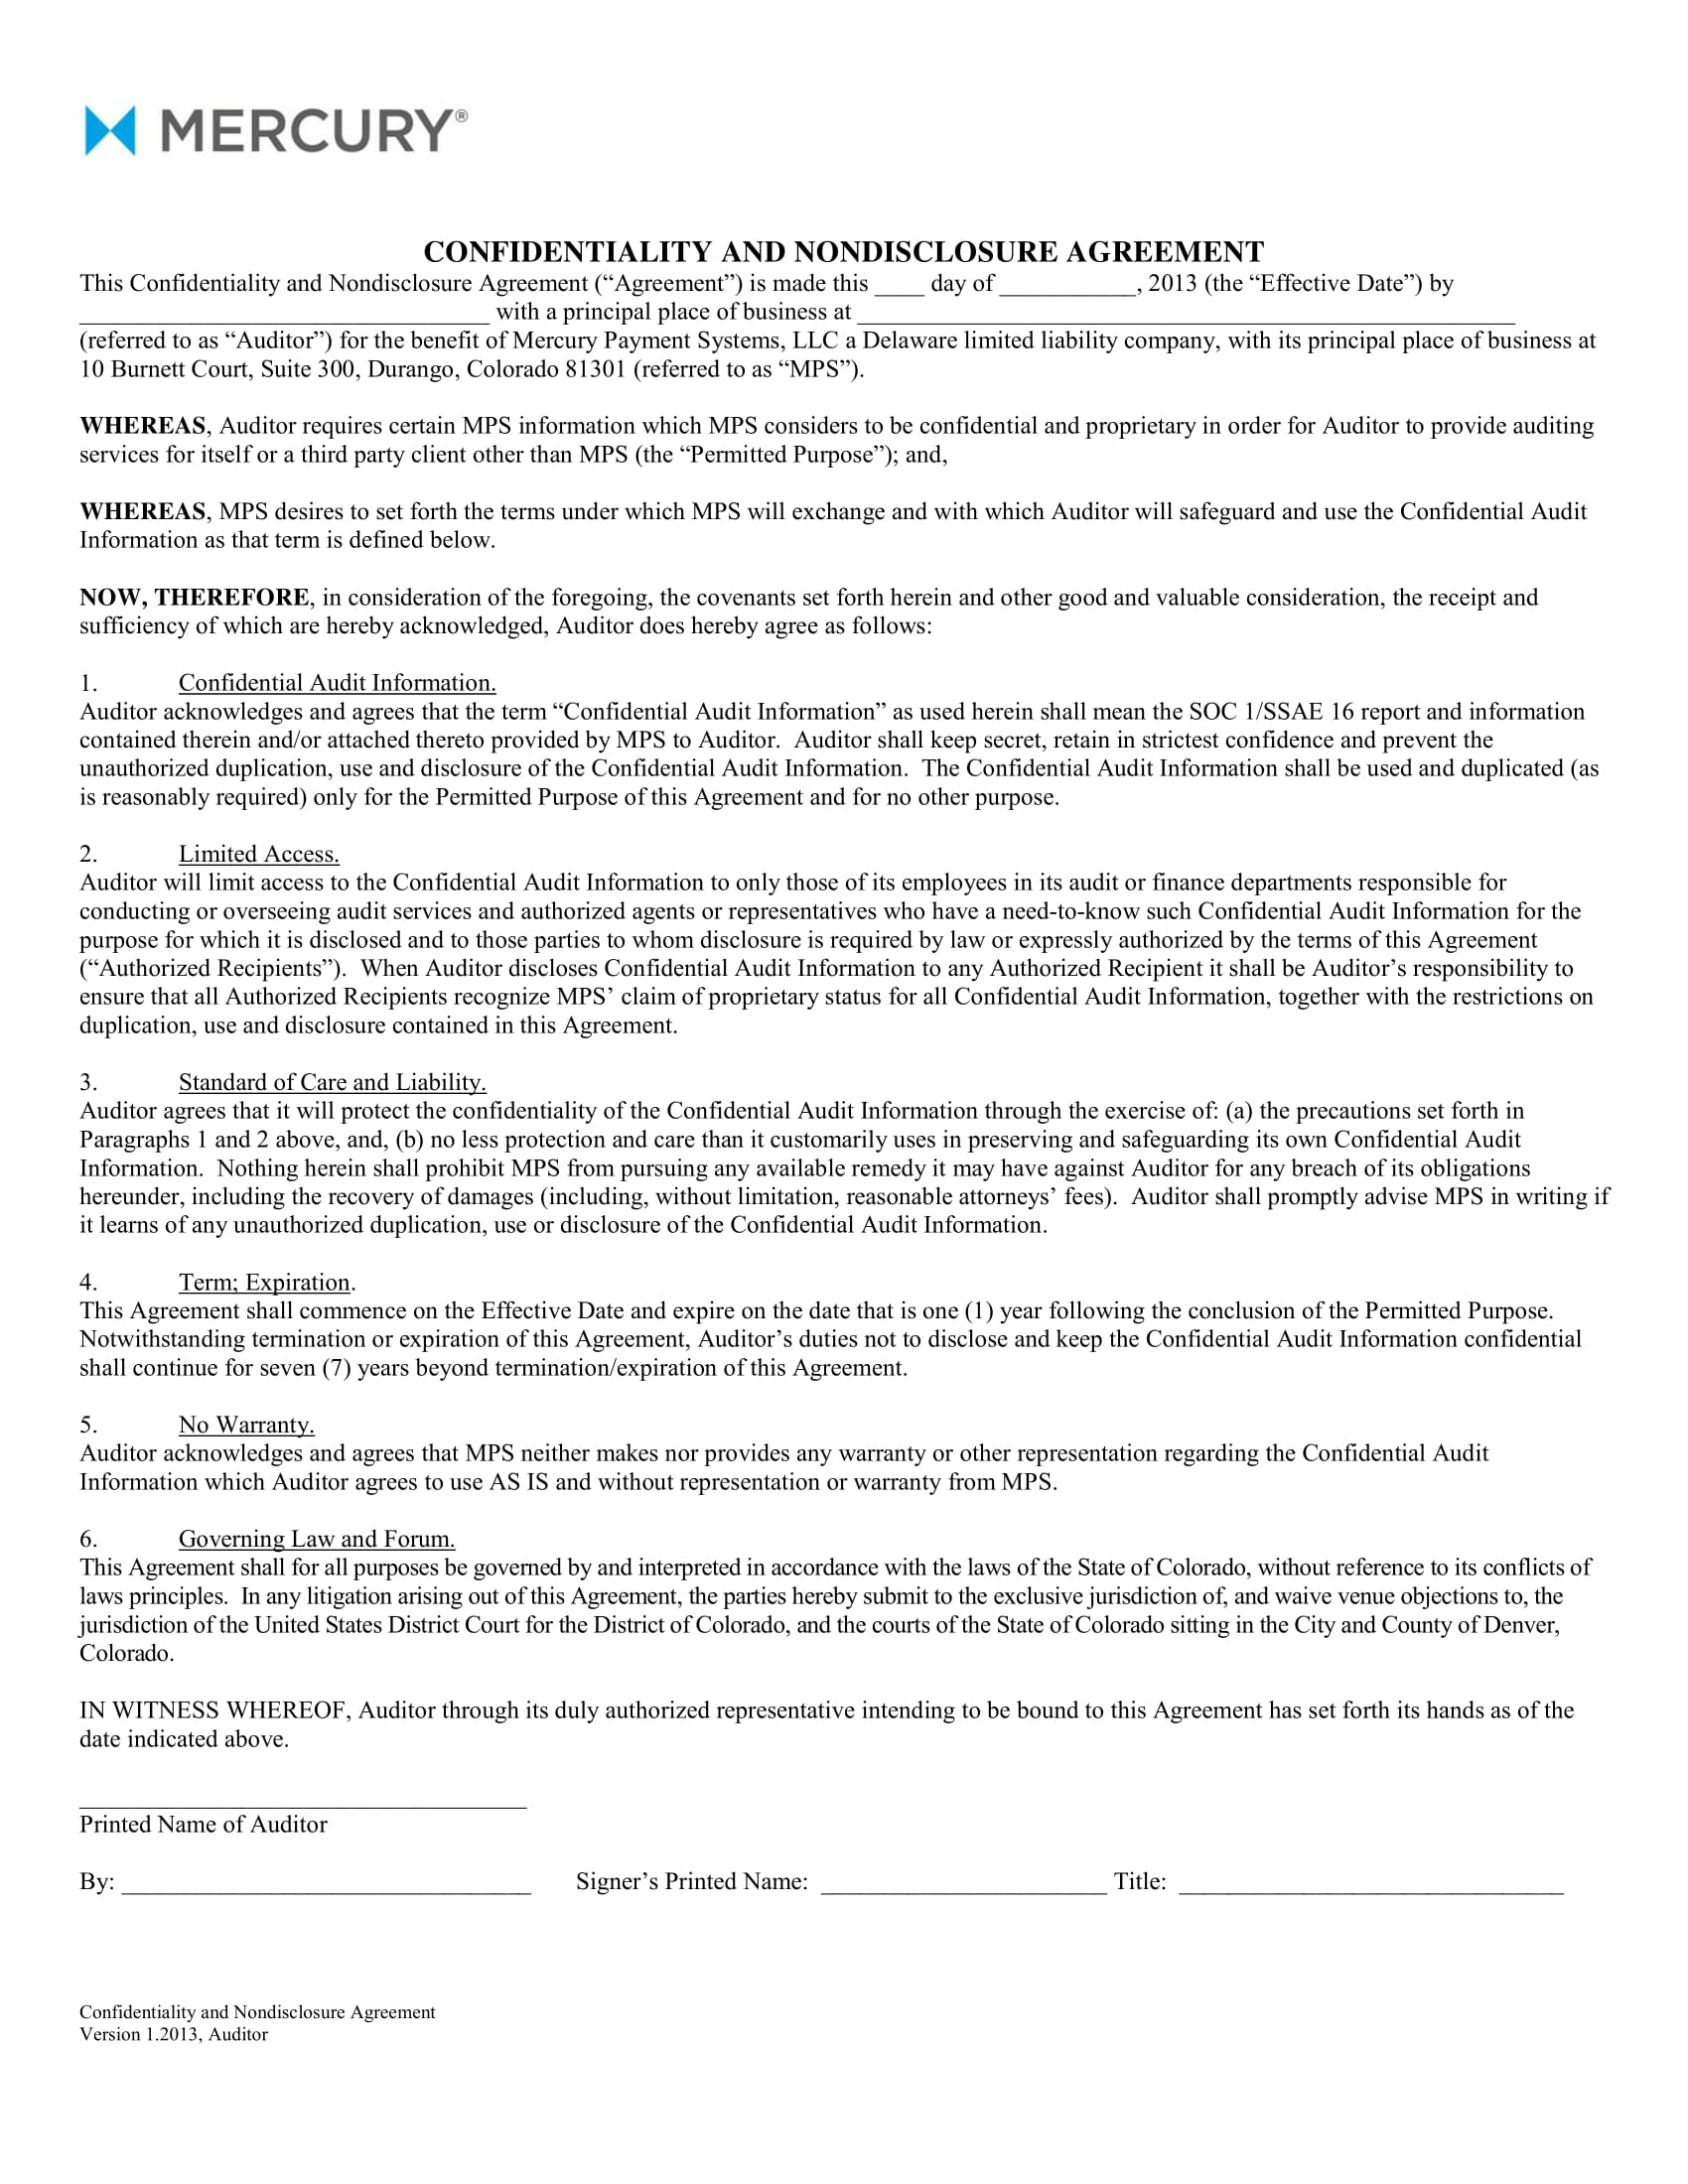 mercury audit confidentiality agreement example